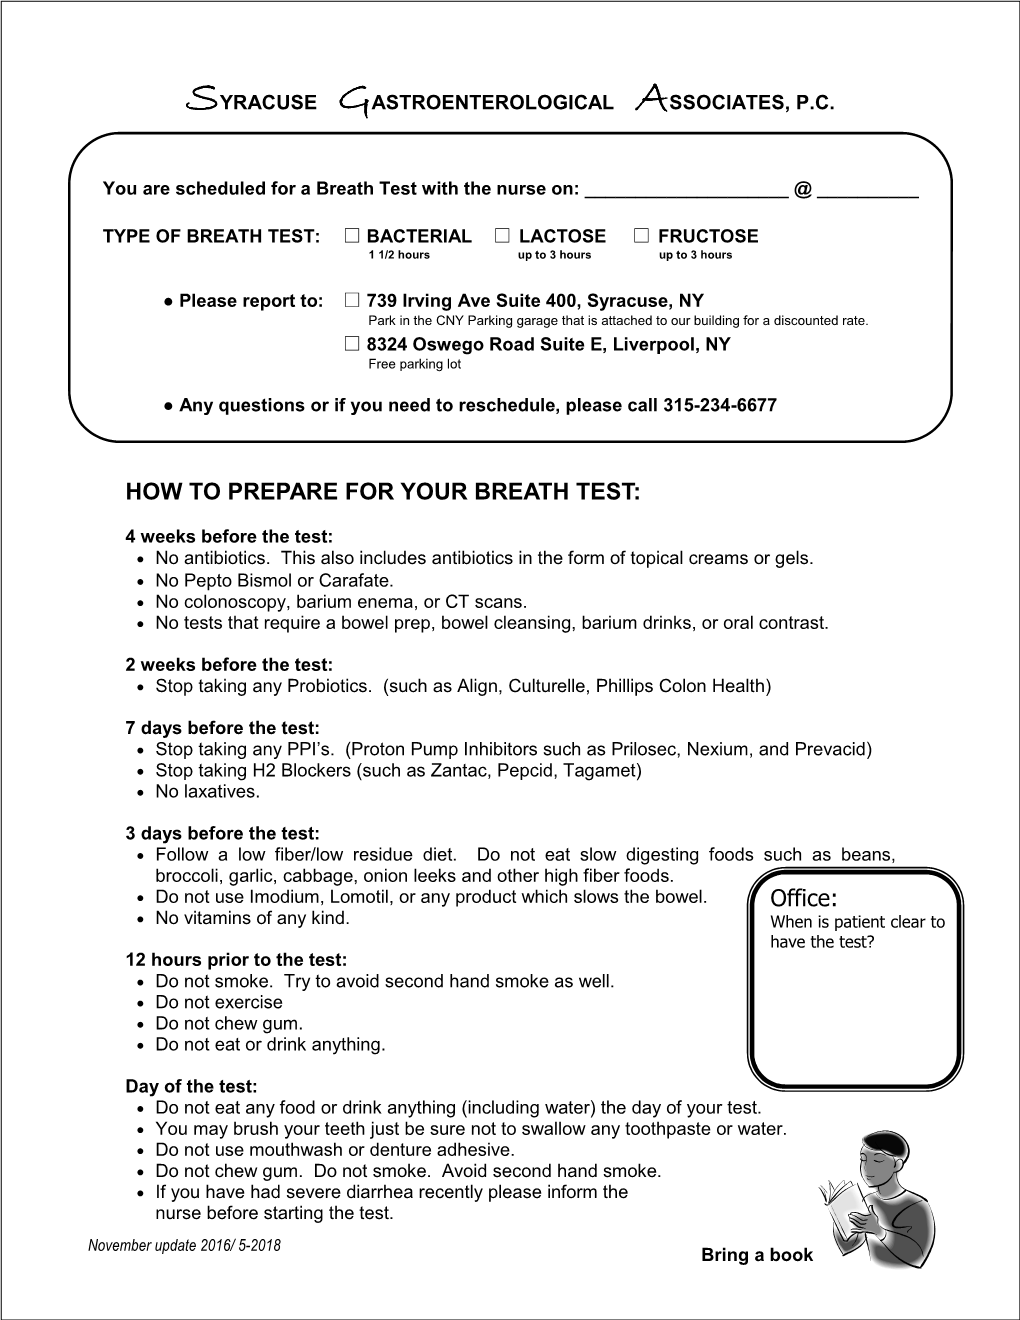 Breath Test Prep 11-2016